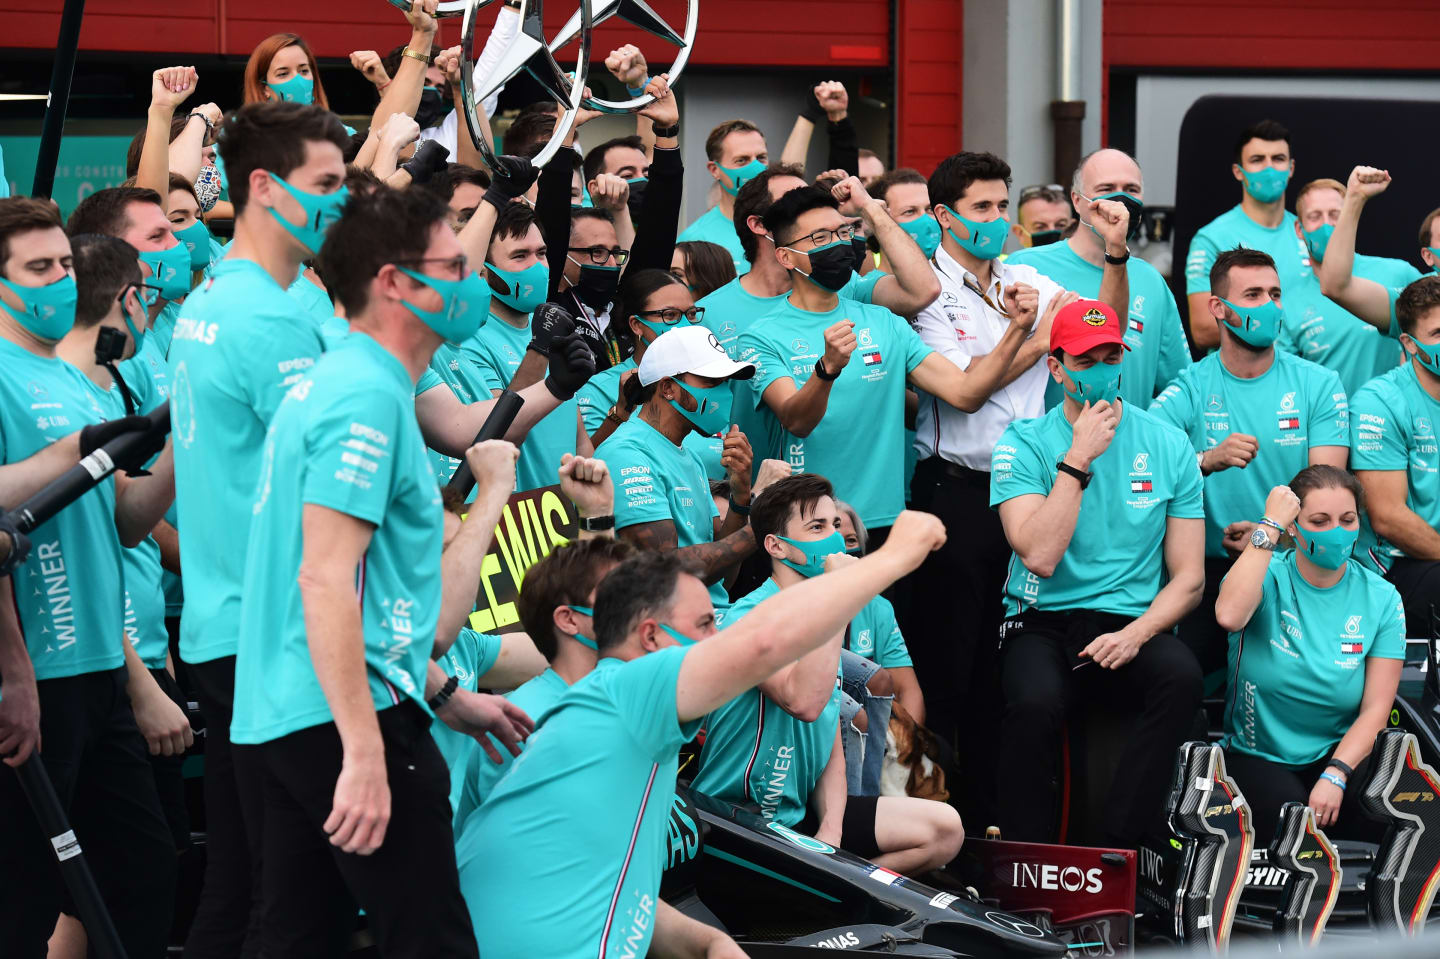 IMOLA, ITALY - NOVEMBER 01: Race winner Lewis Hamilton of Great Britain and Mercedes GP celebrates